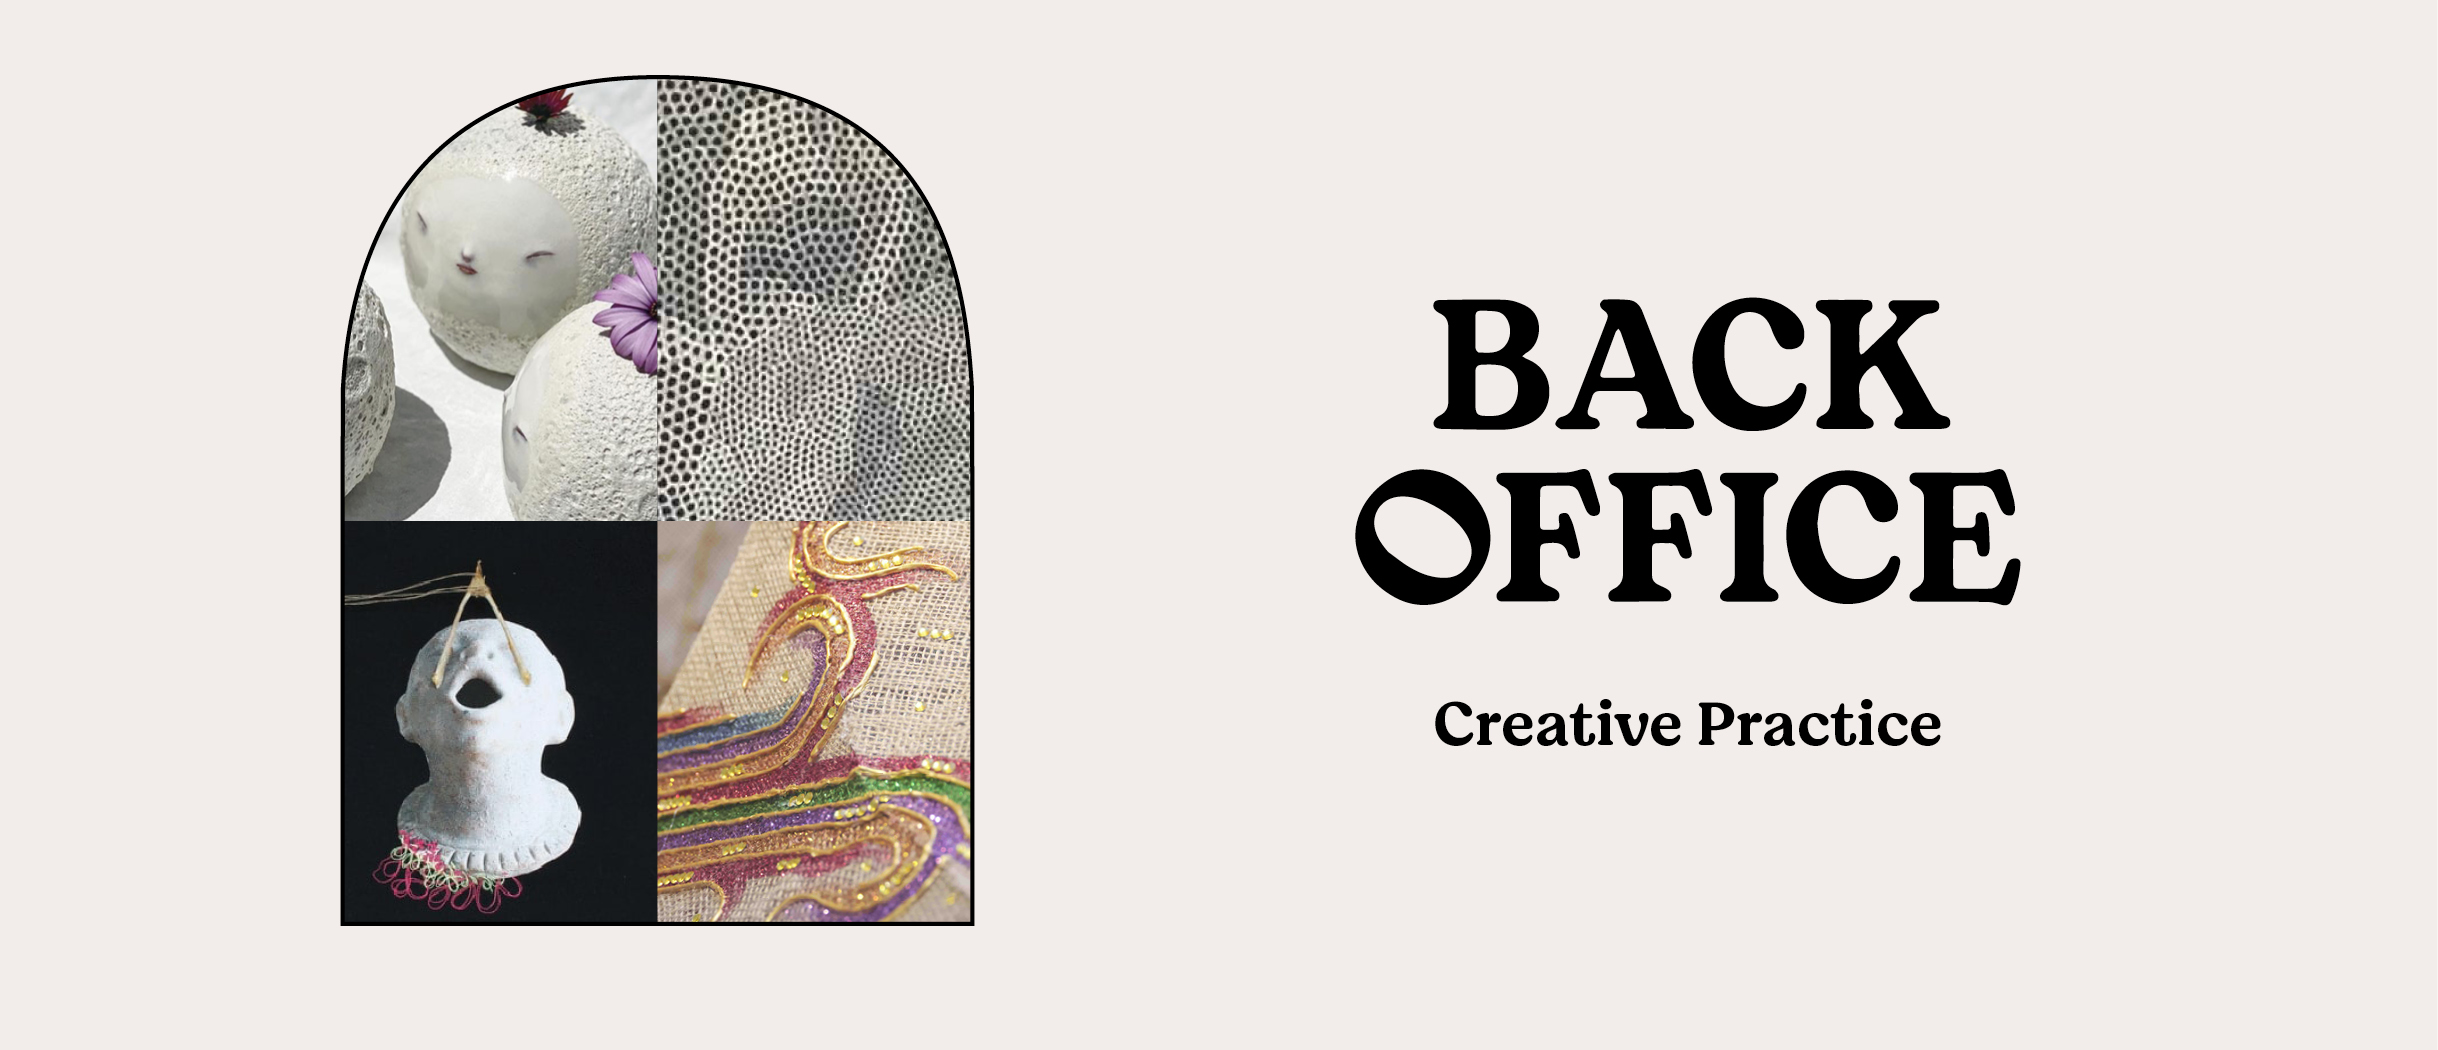 Back Office: Creative Practice